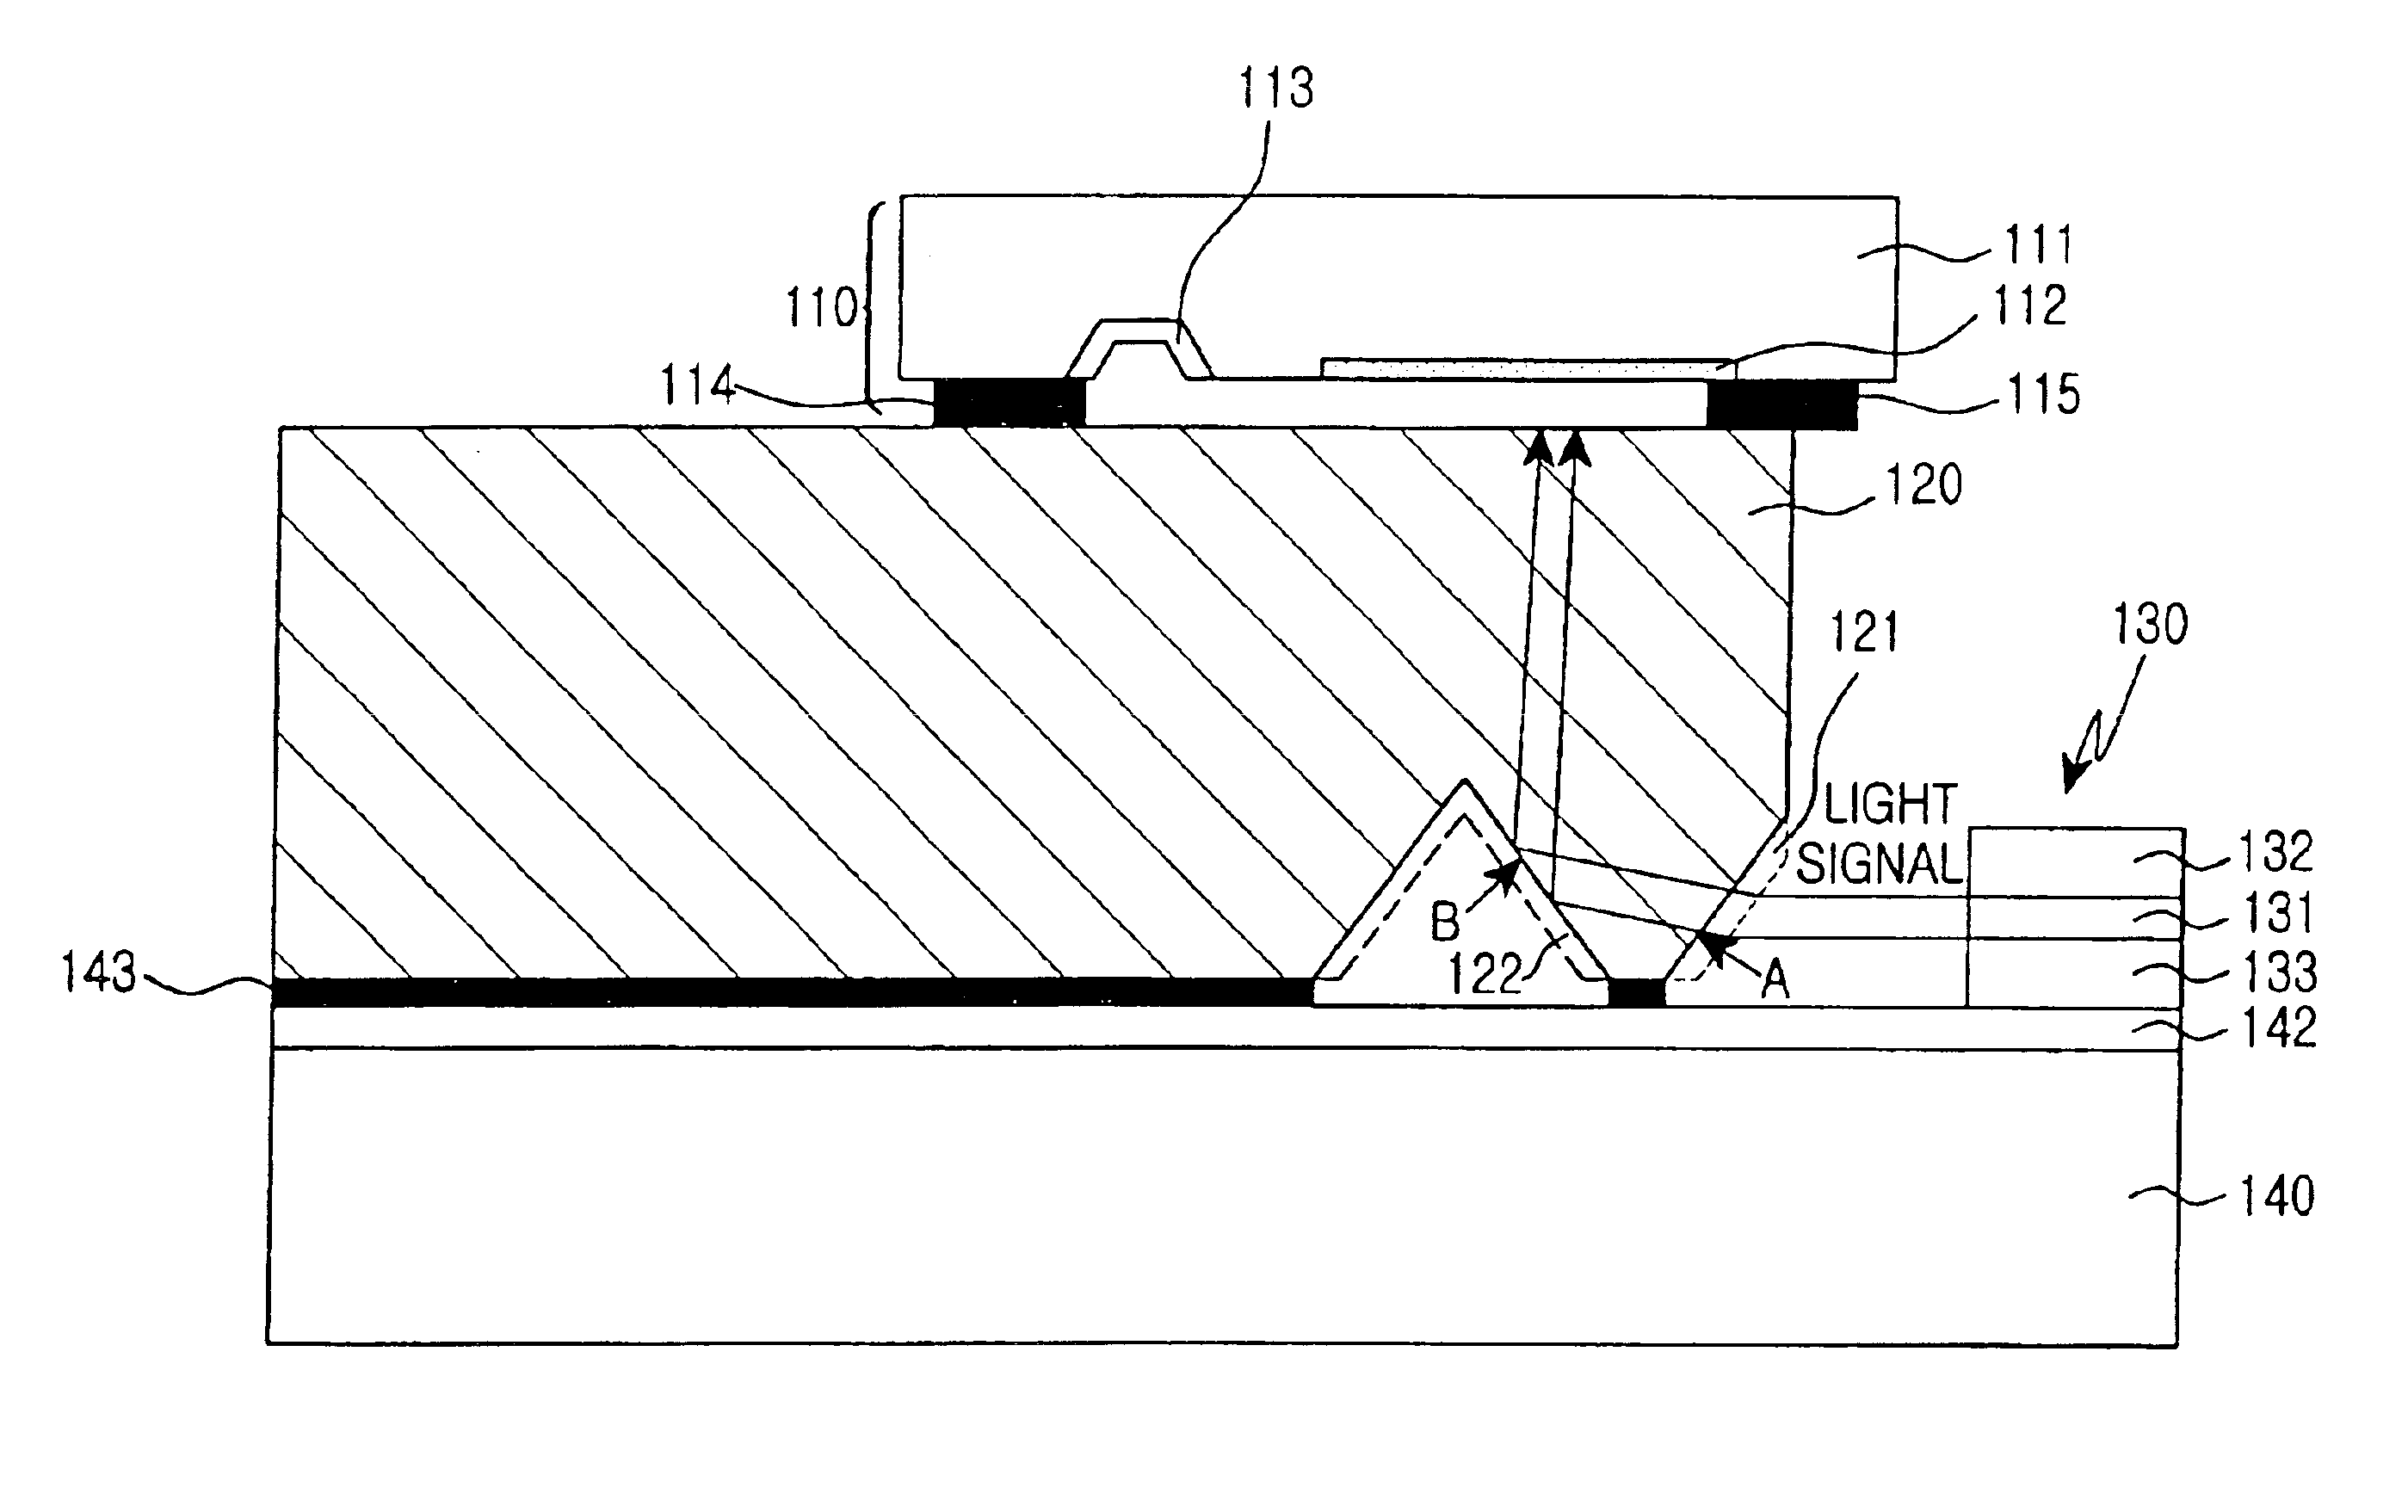 Optical apparatus using vertical light receiving element